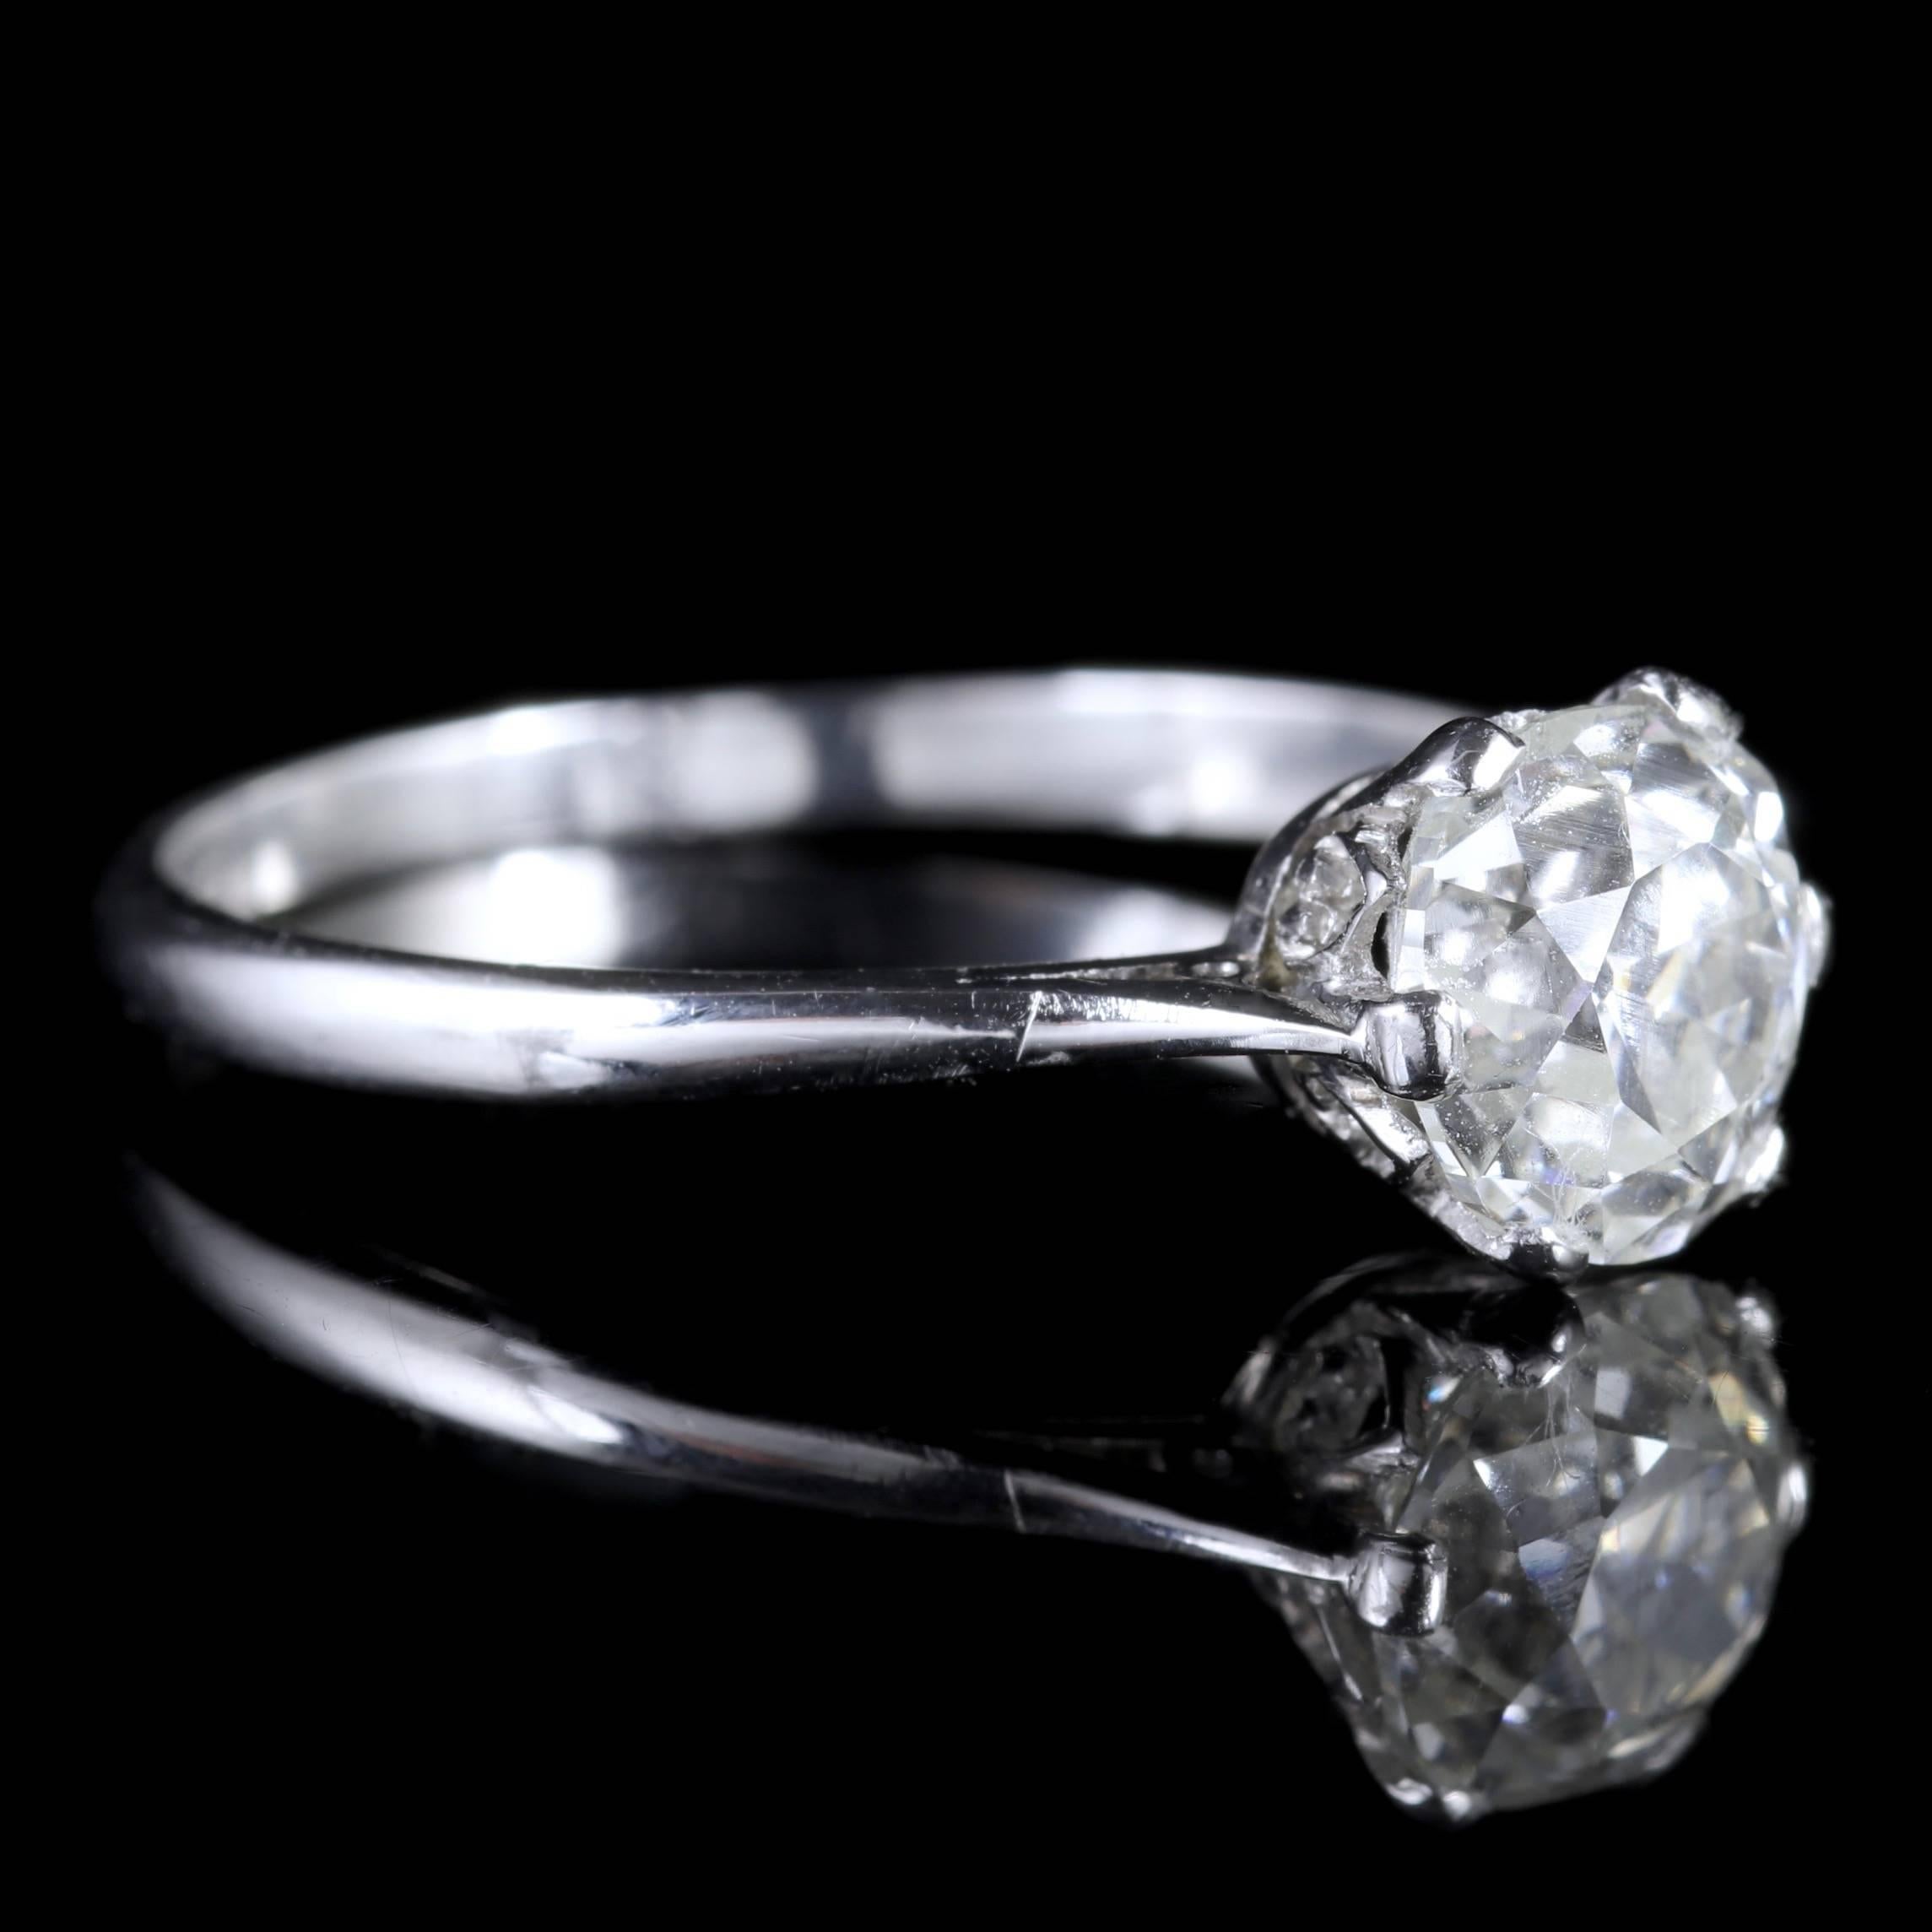 Women's Antique Edwardian 1.45 Carat Diamond Solitaire Engagement Ring, circa 1910